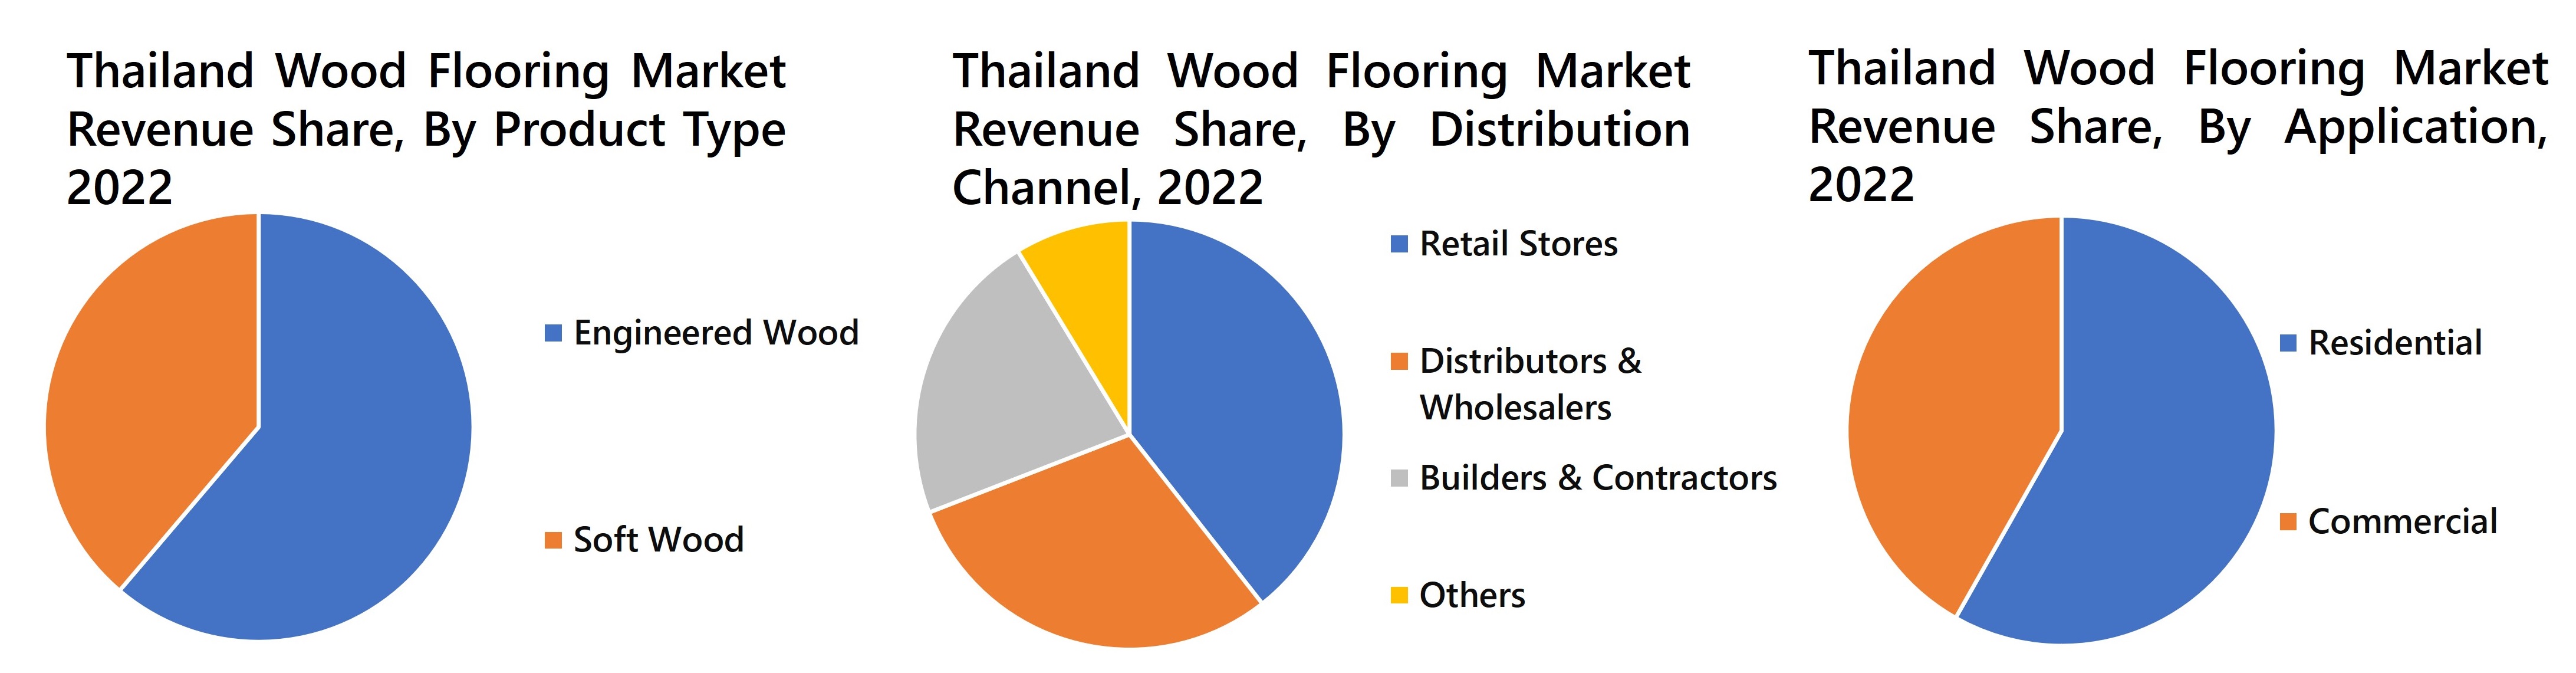 Thailand Wood Flooring Market Revenue Share